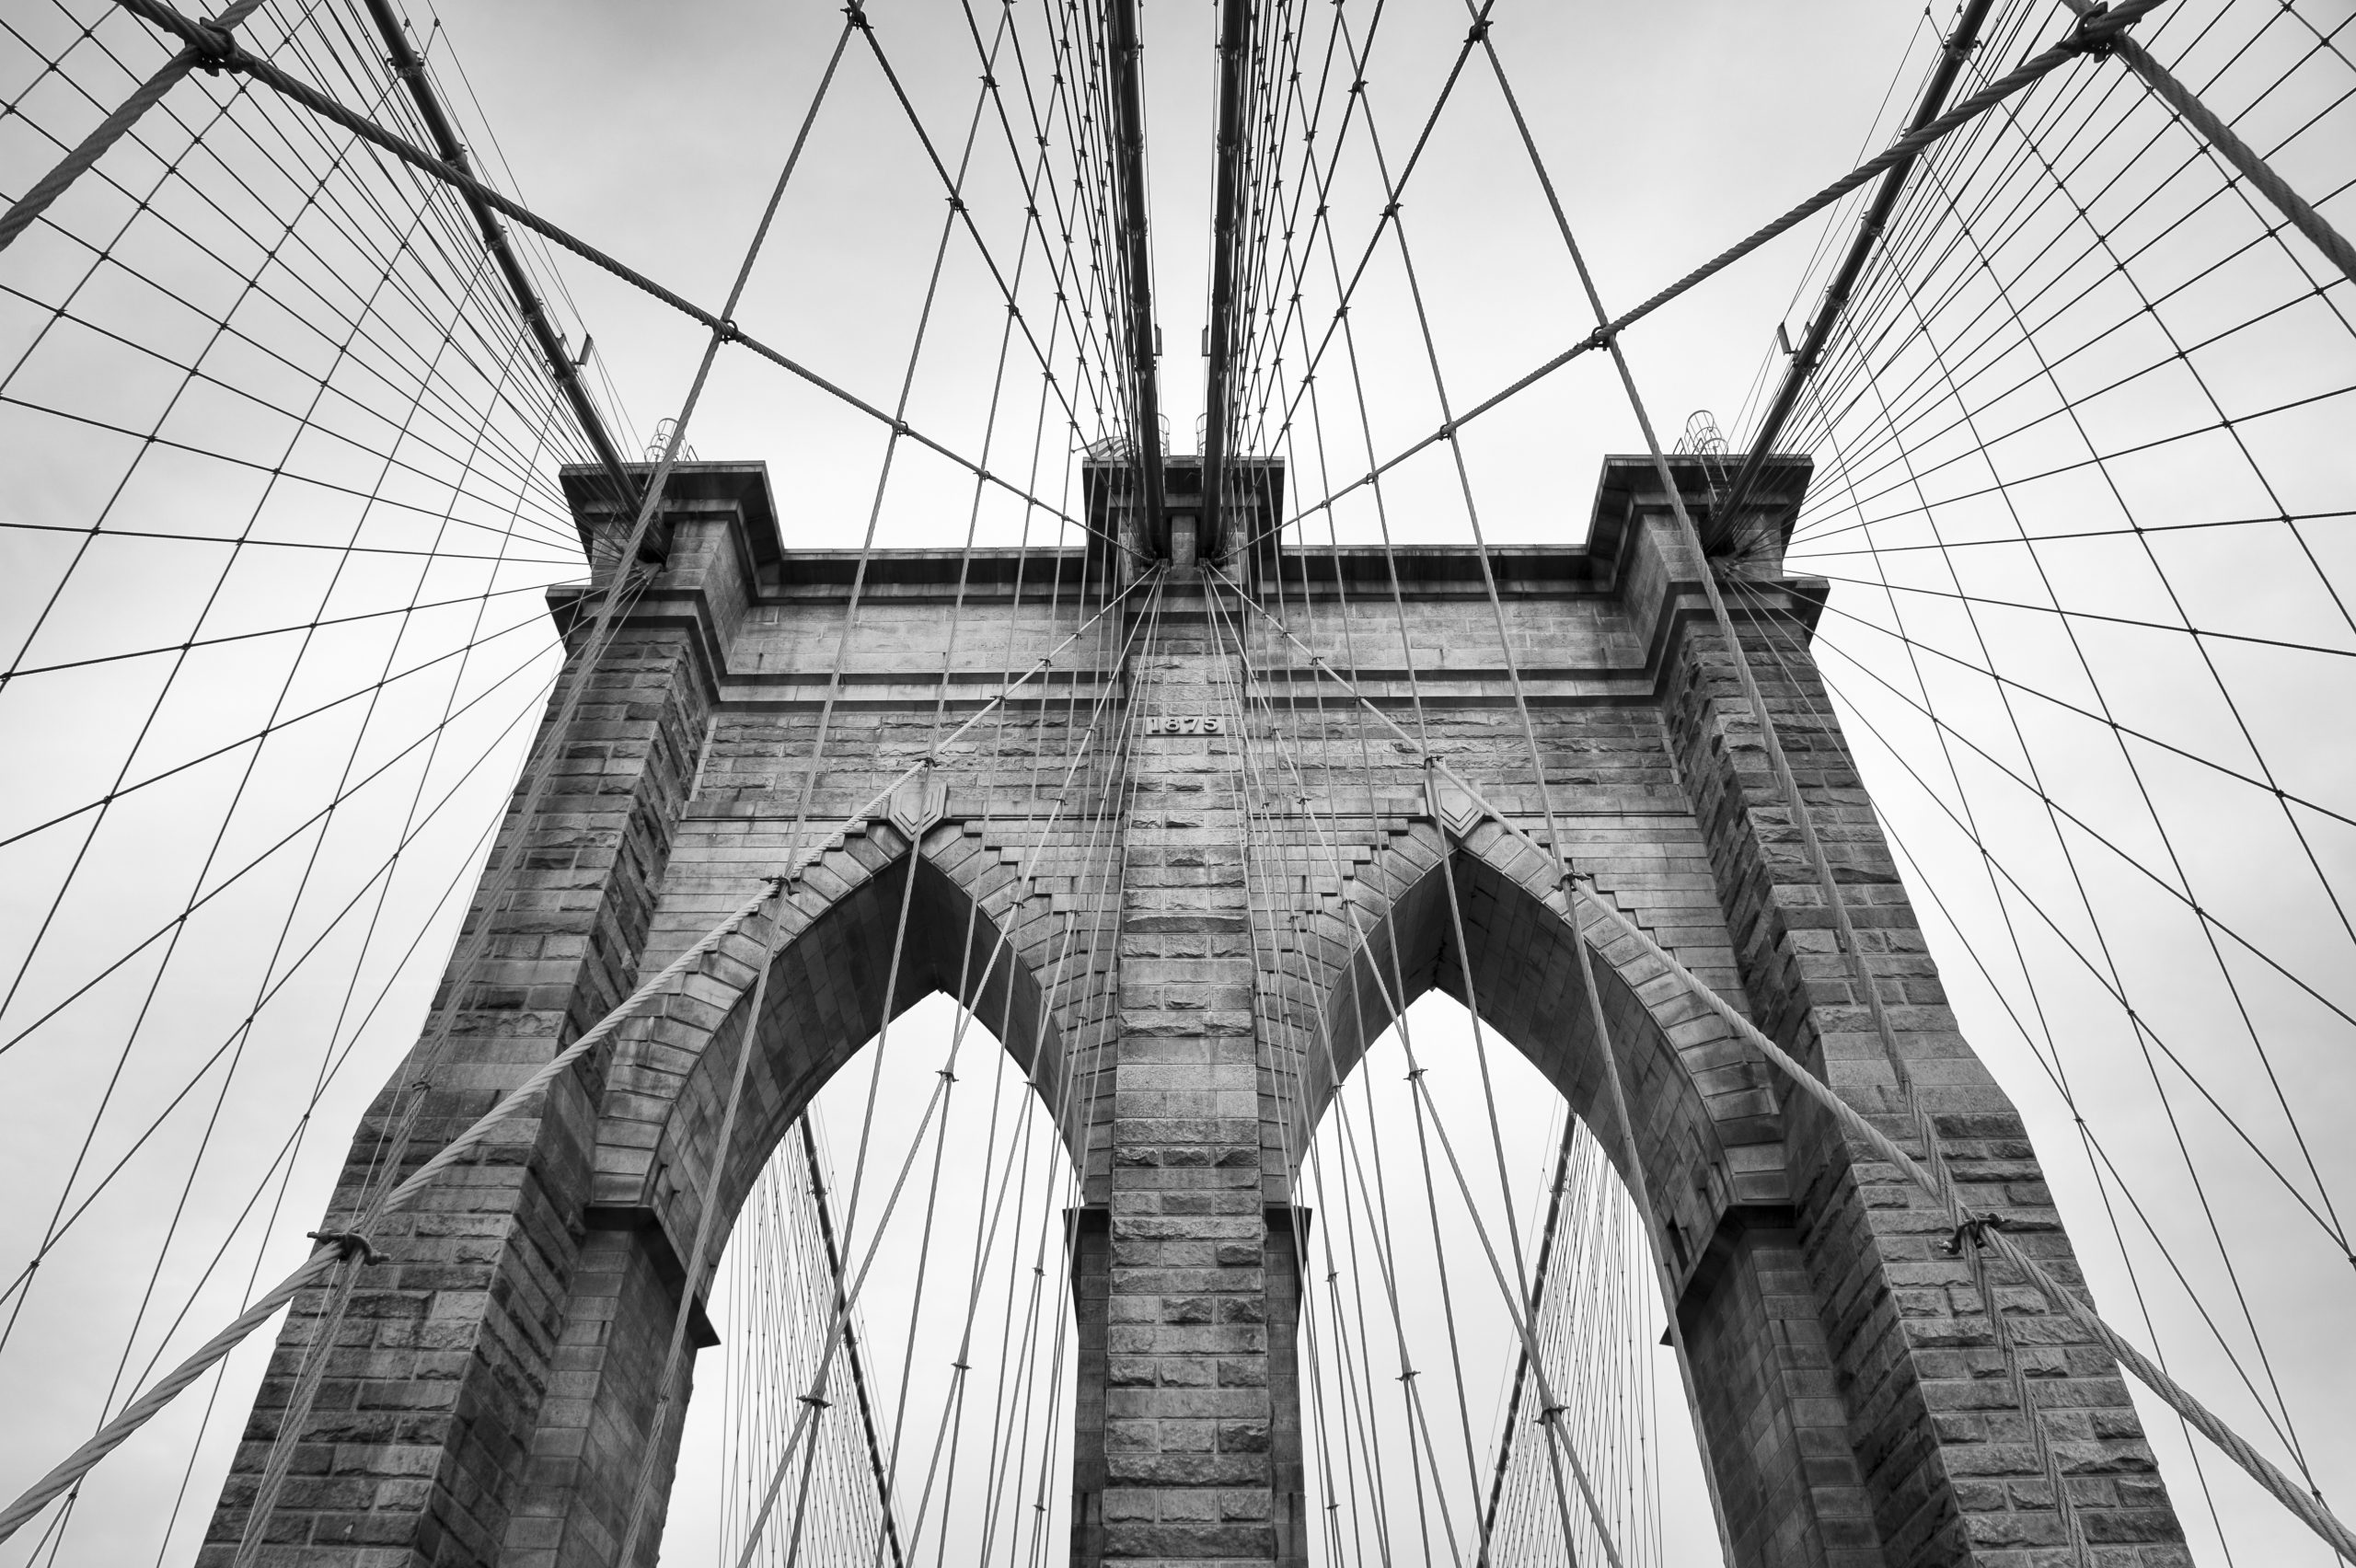 Download wallpaper: Brooklyn Bridge 1920x1080